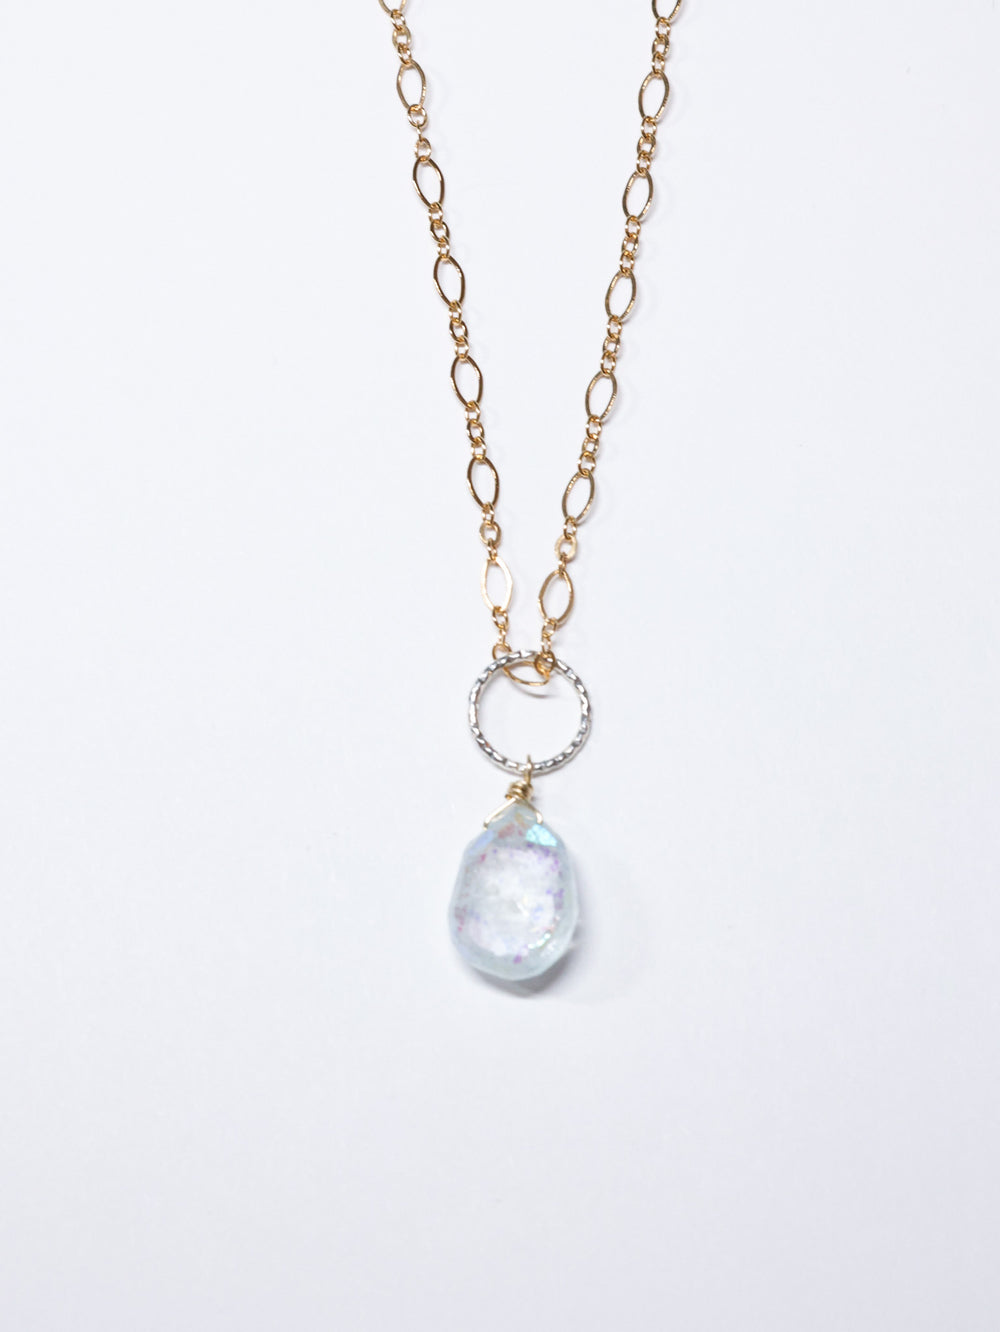 AB aquamarine pendant necklace -gold filled